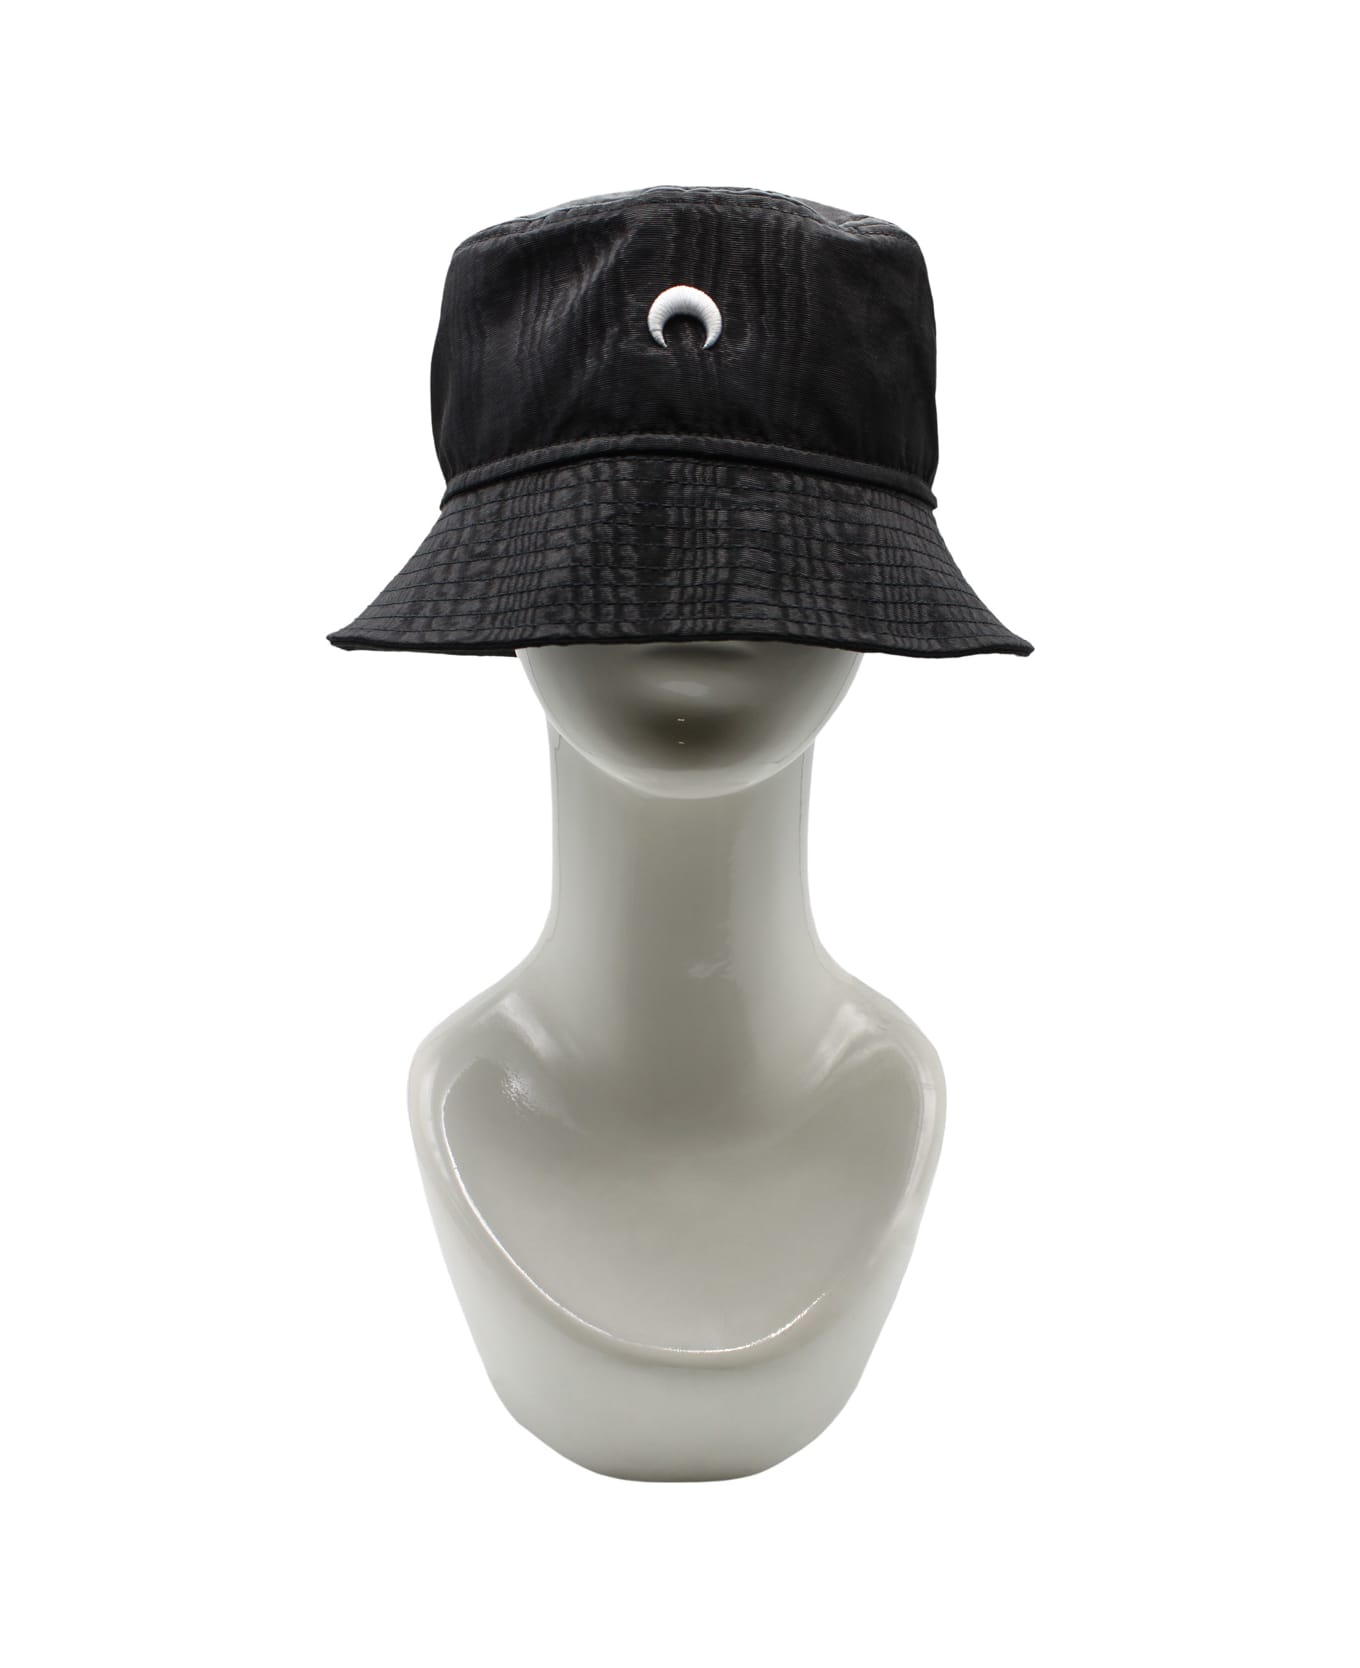 Marine Serre Regenerated Moire Bucket Hat - Black